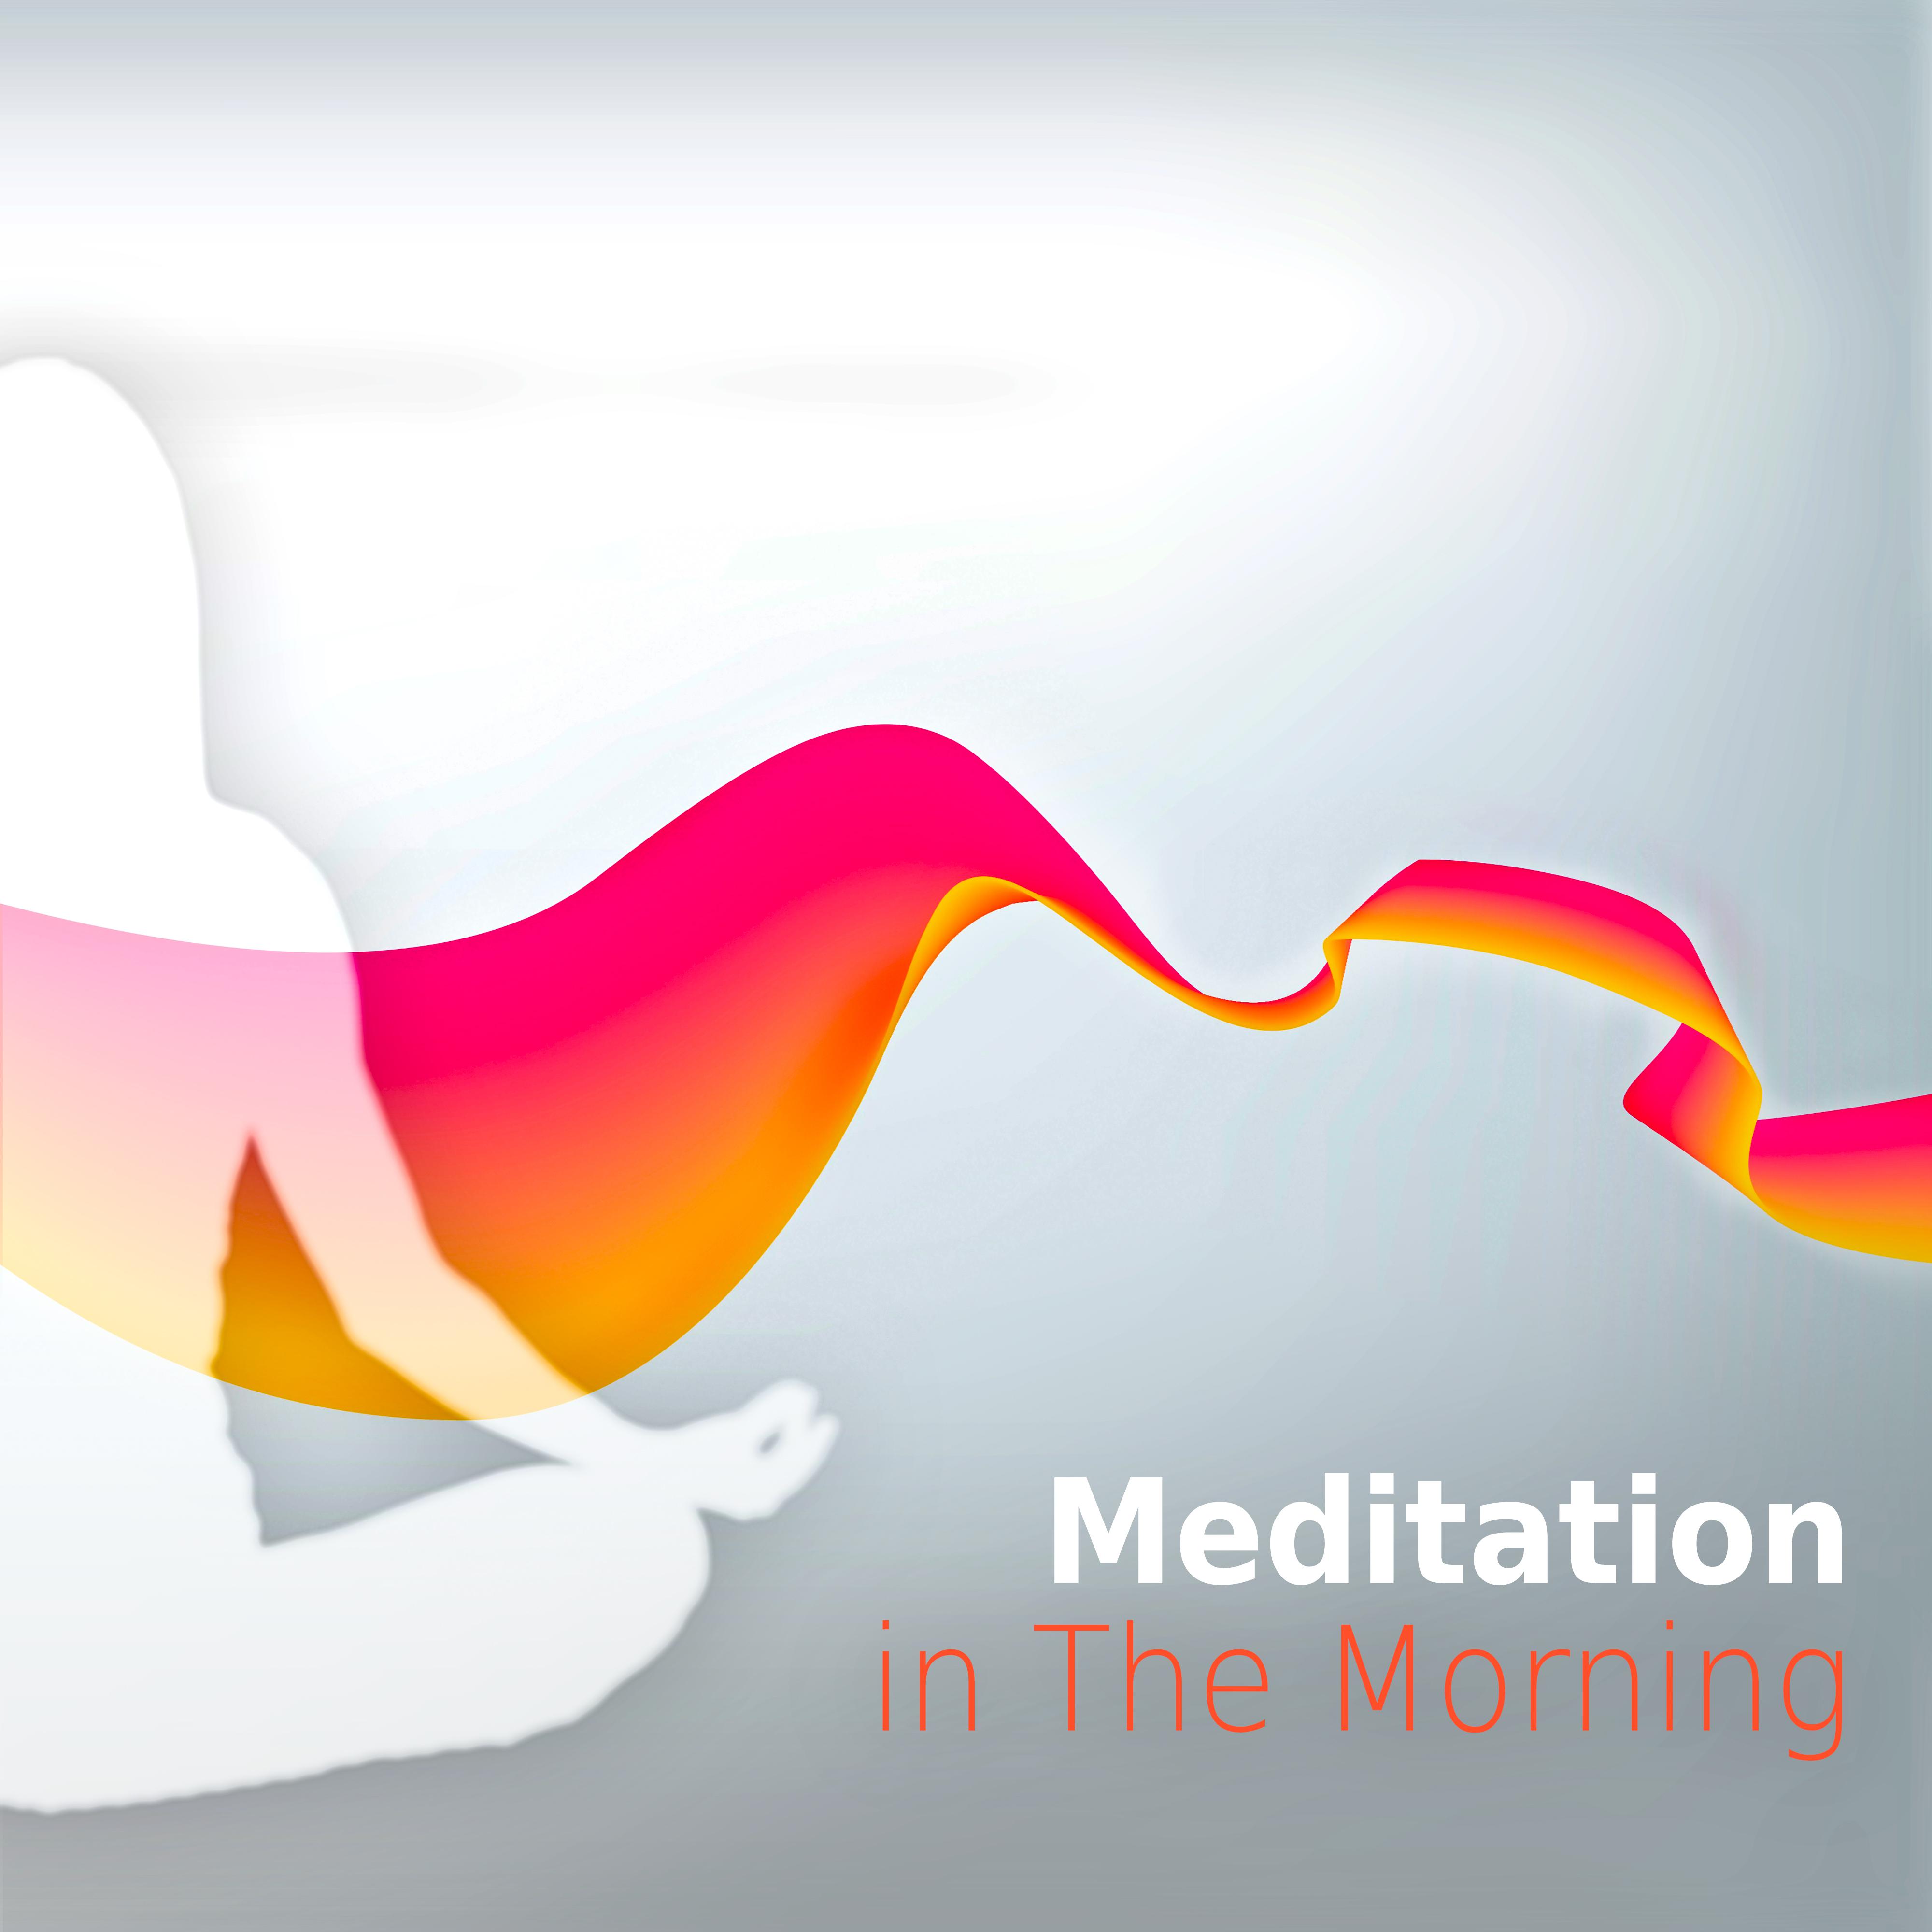 Meditation in The Morning  Yoga Music, Surya Namaskar, Asana Positions, Meditation and Relaxation Music, Welness and SPA